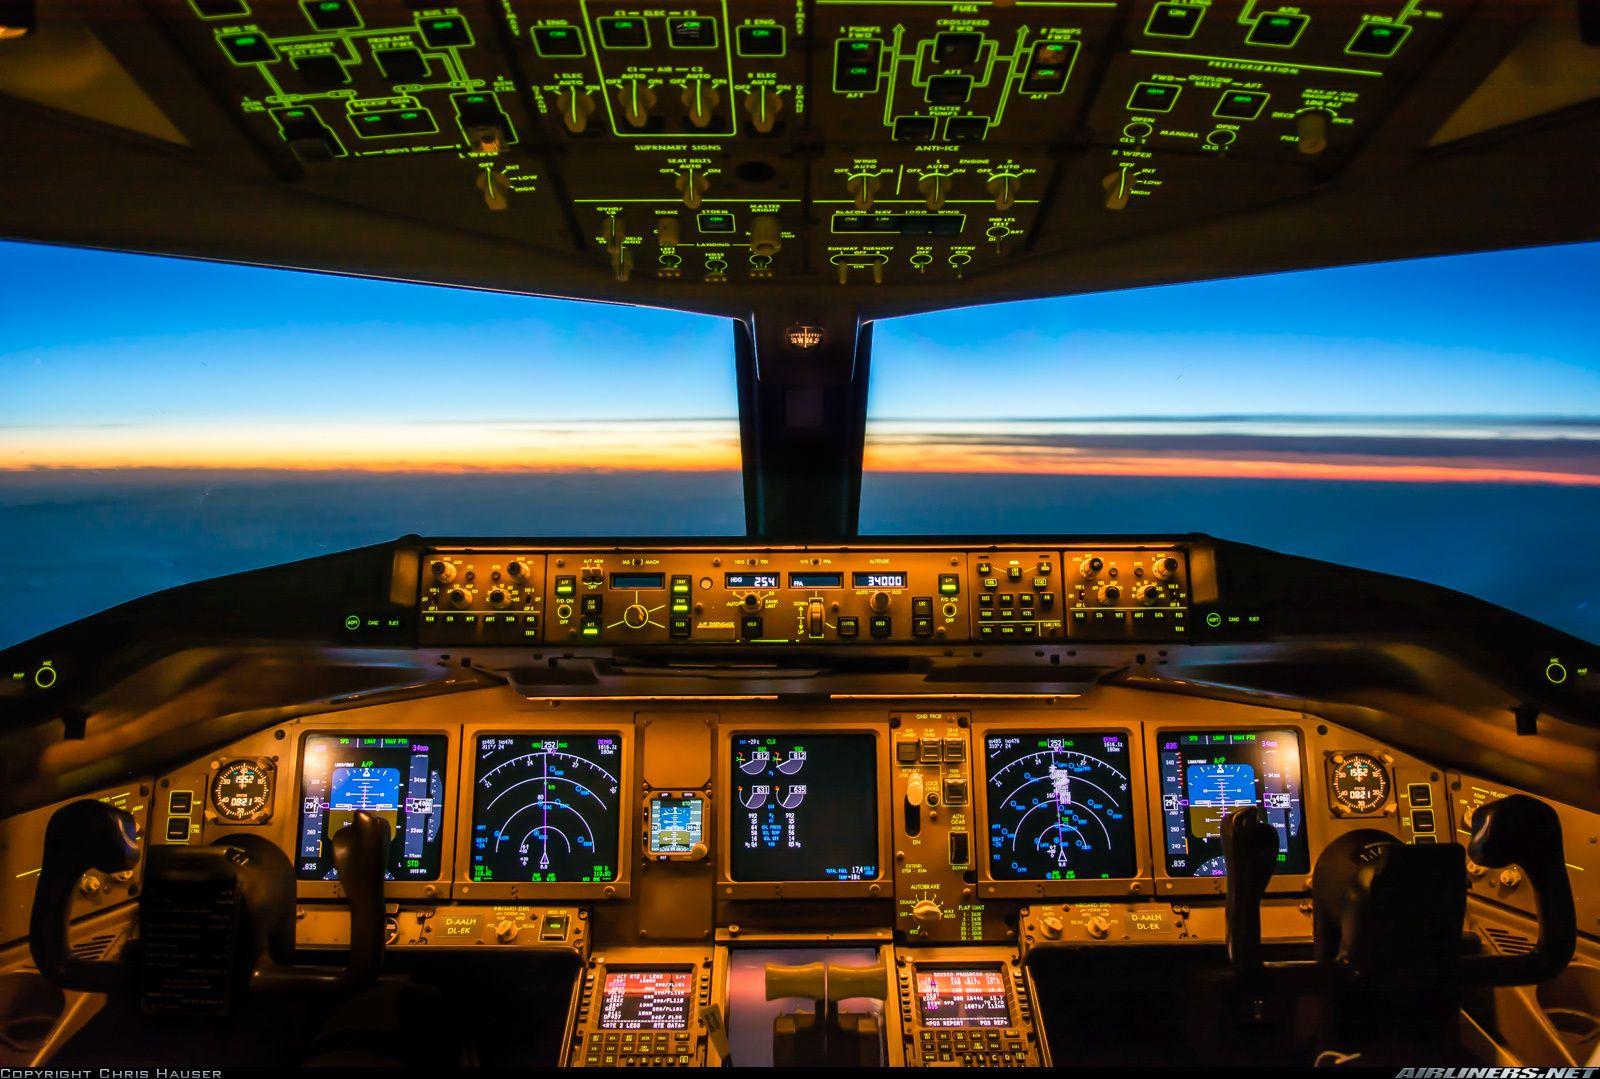 Boeing 777 Cockpit View